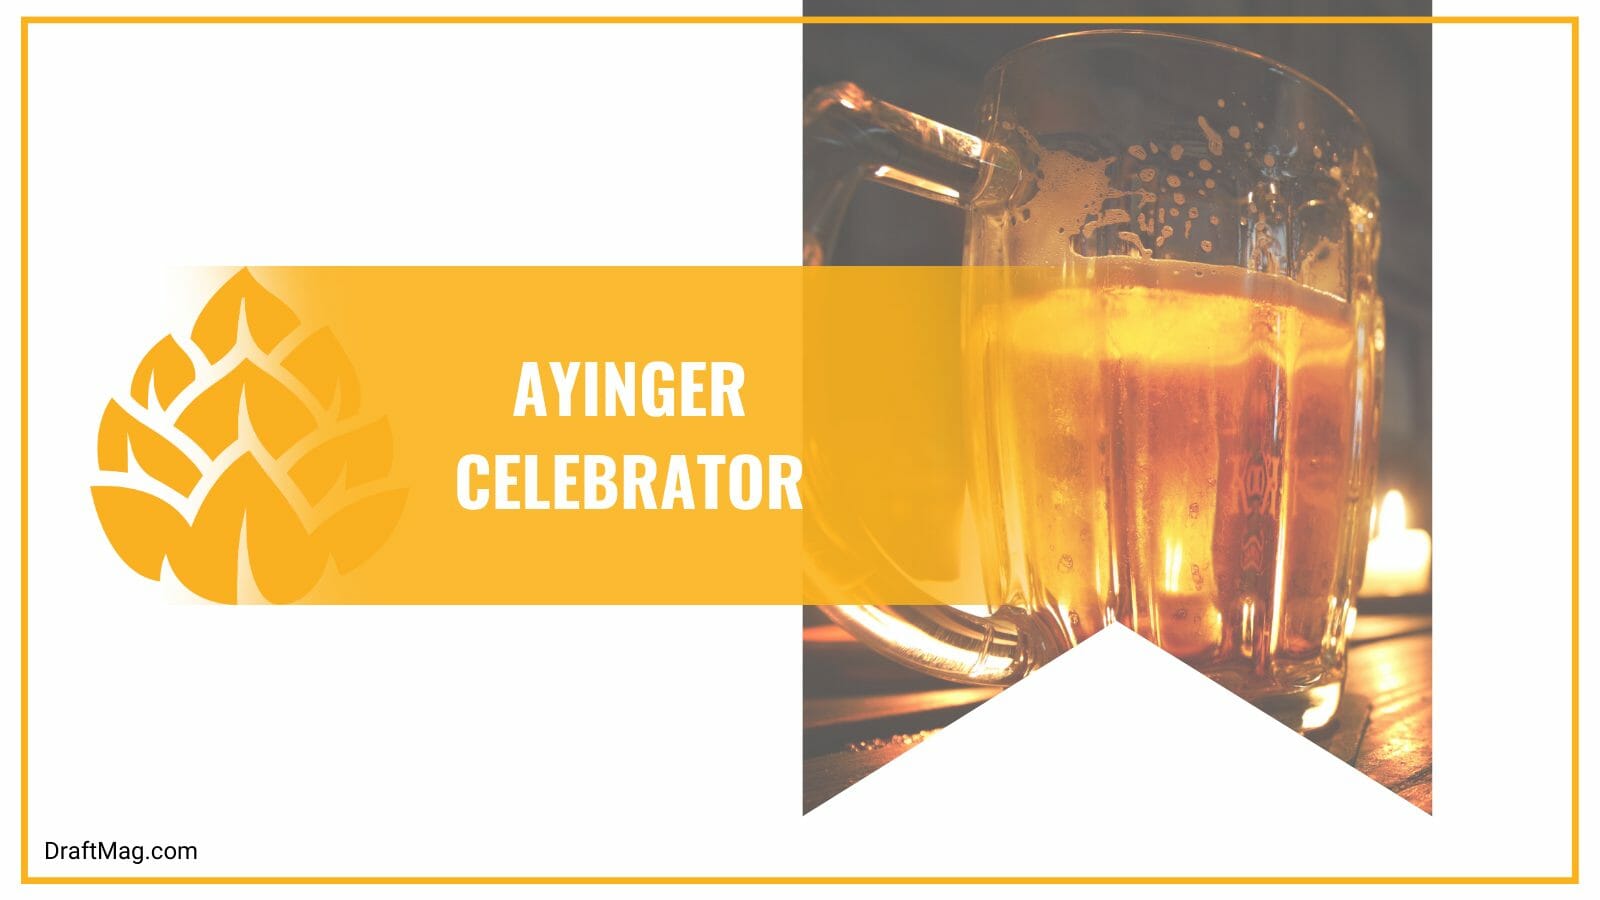 Ayinger celebrator with sweetness